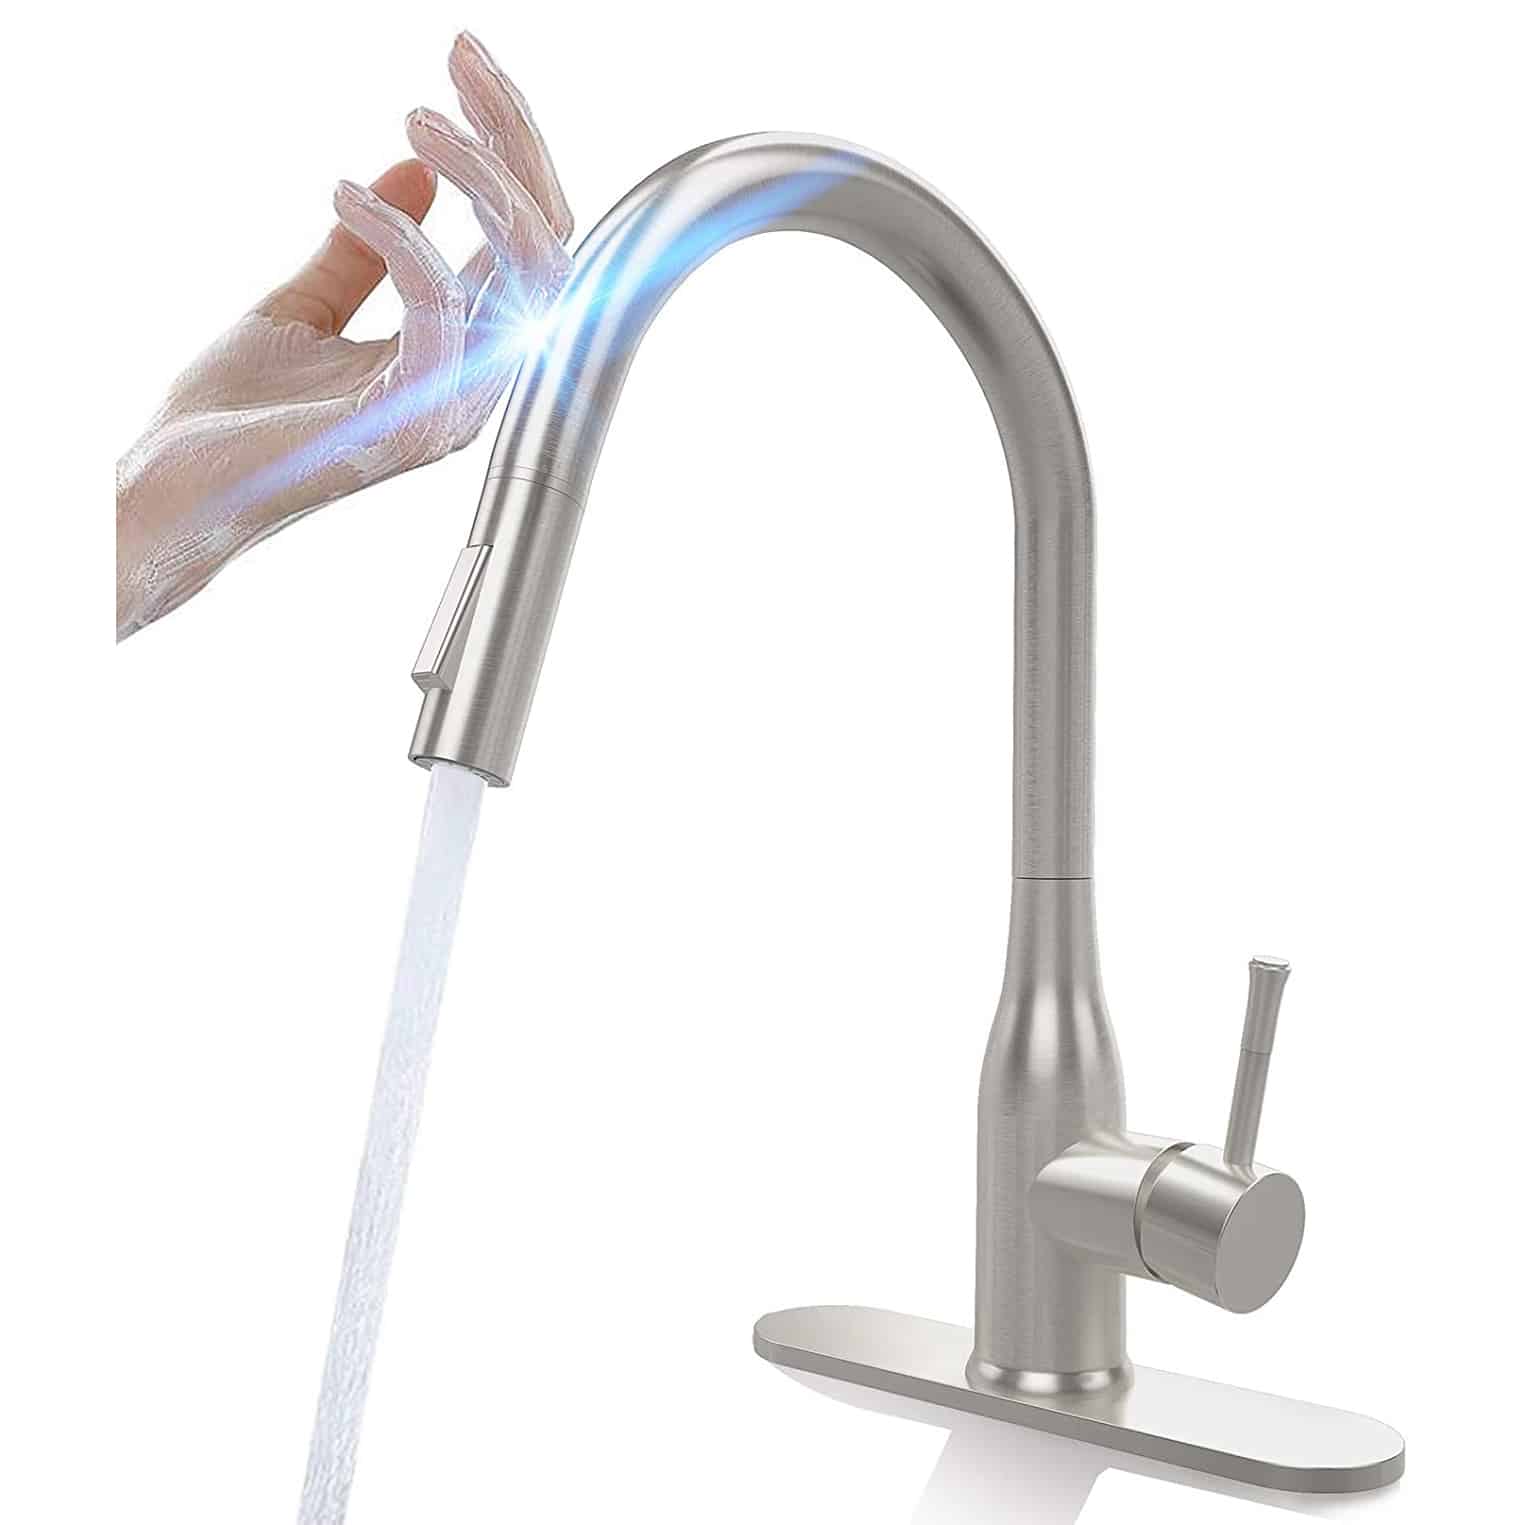 1. CWM Touch Kitchen Faucet W Pull Down Sprayer 